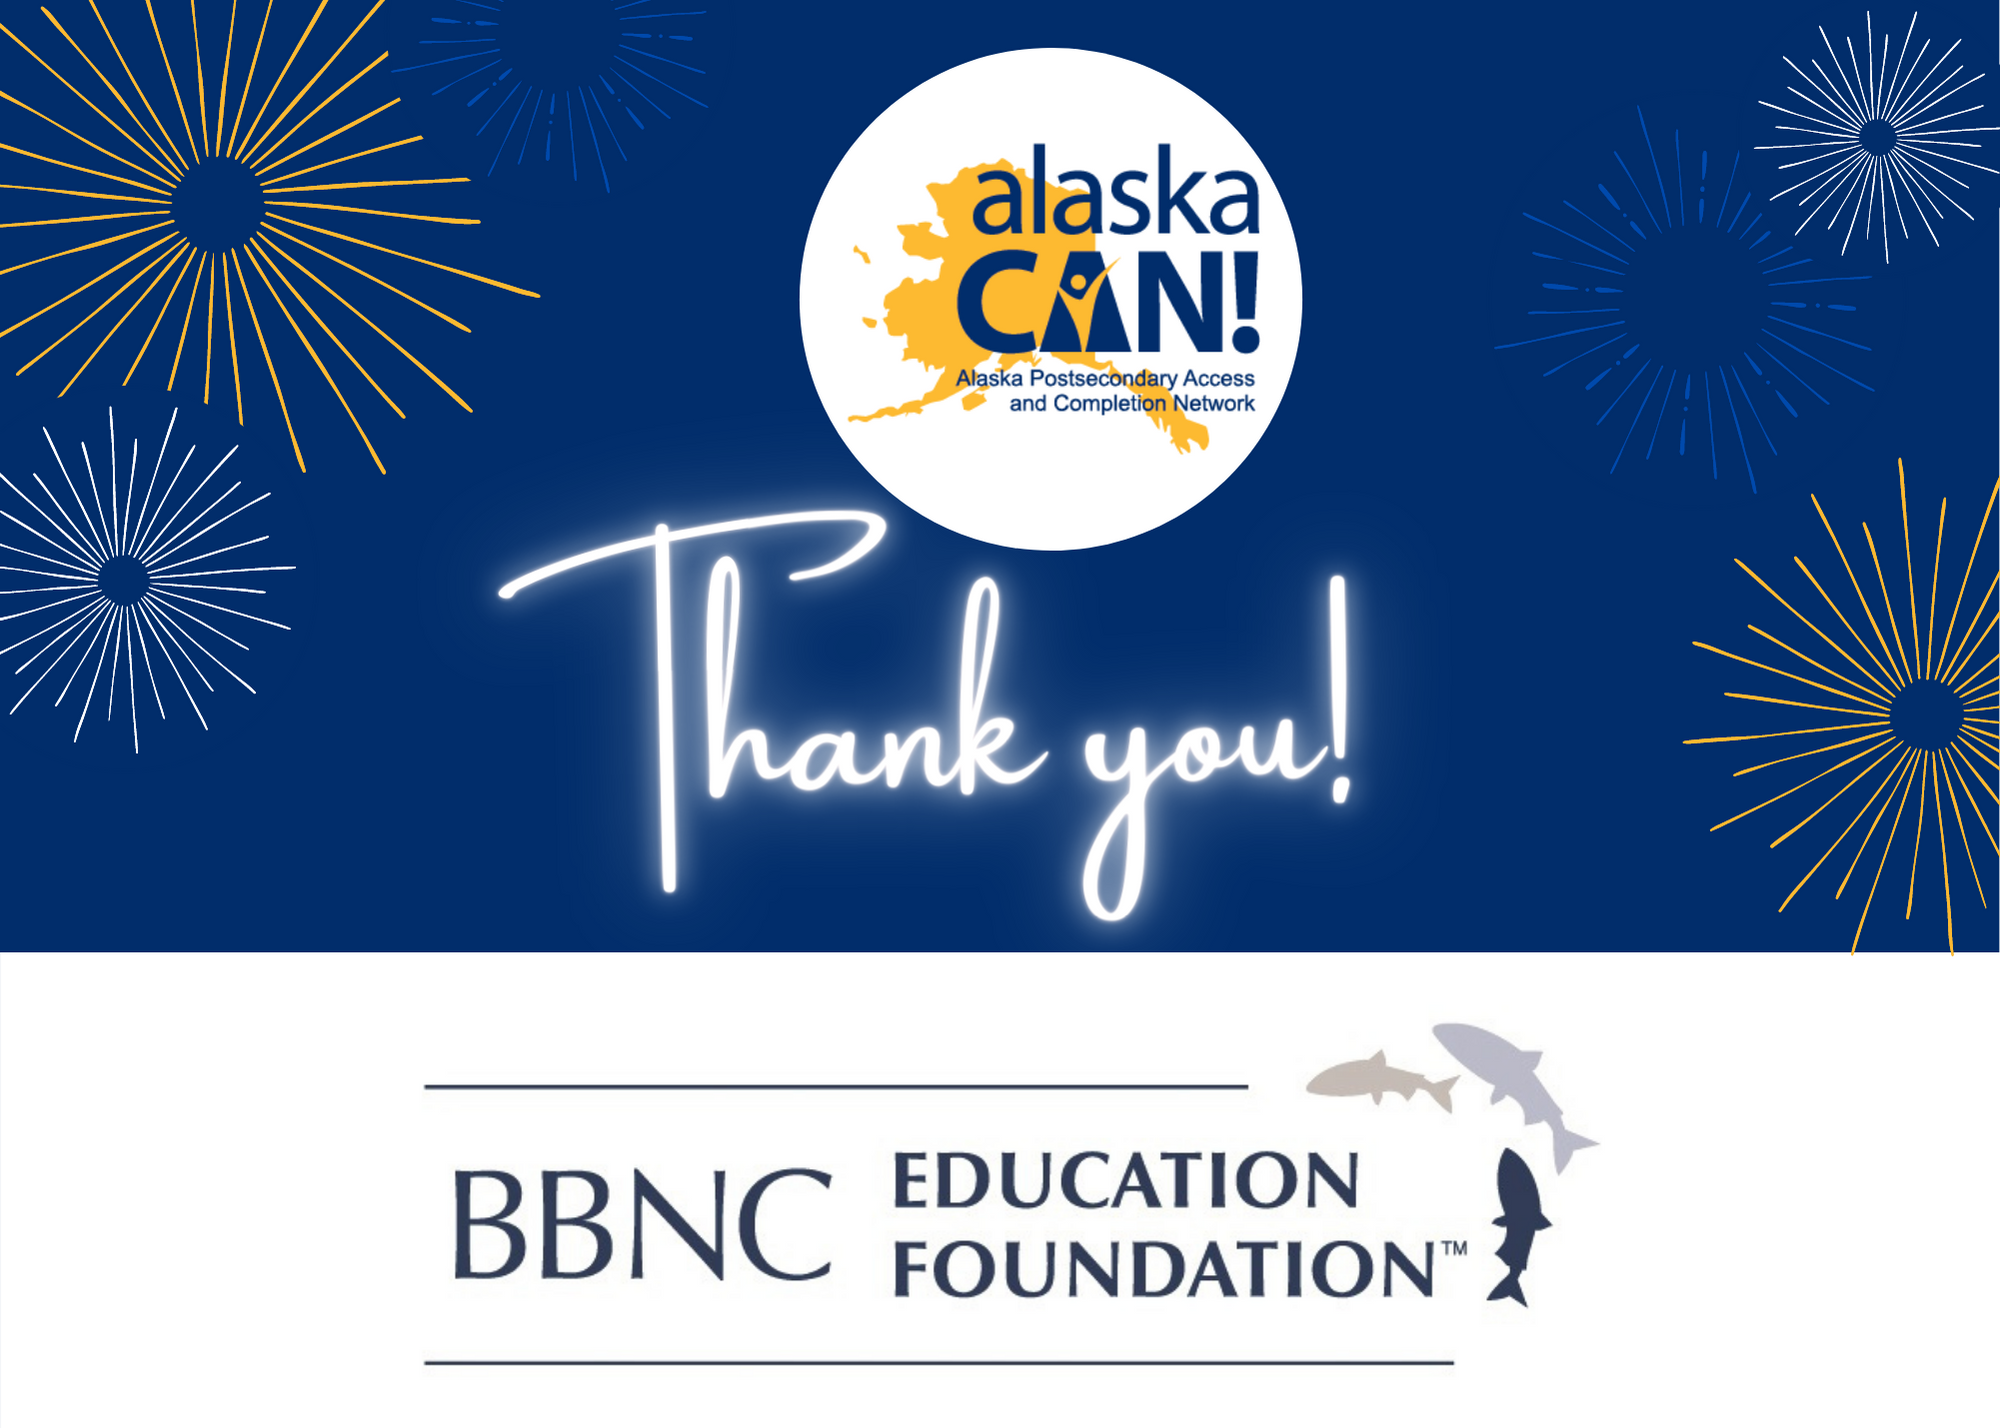 Thank you Alaska Safety Network